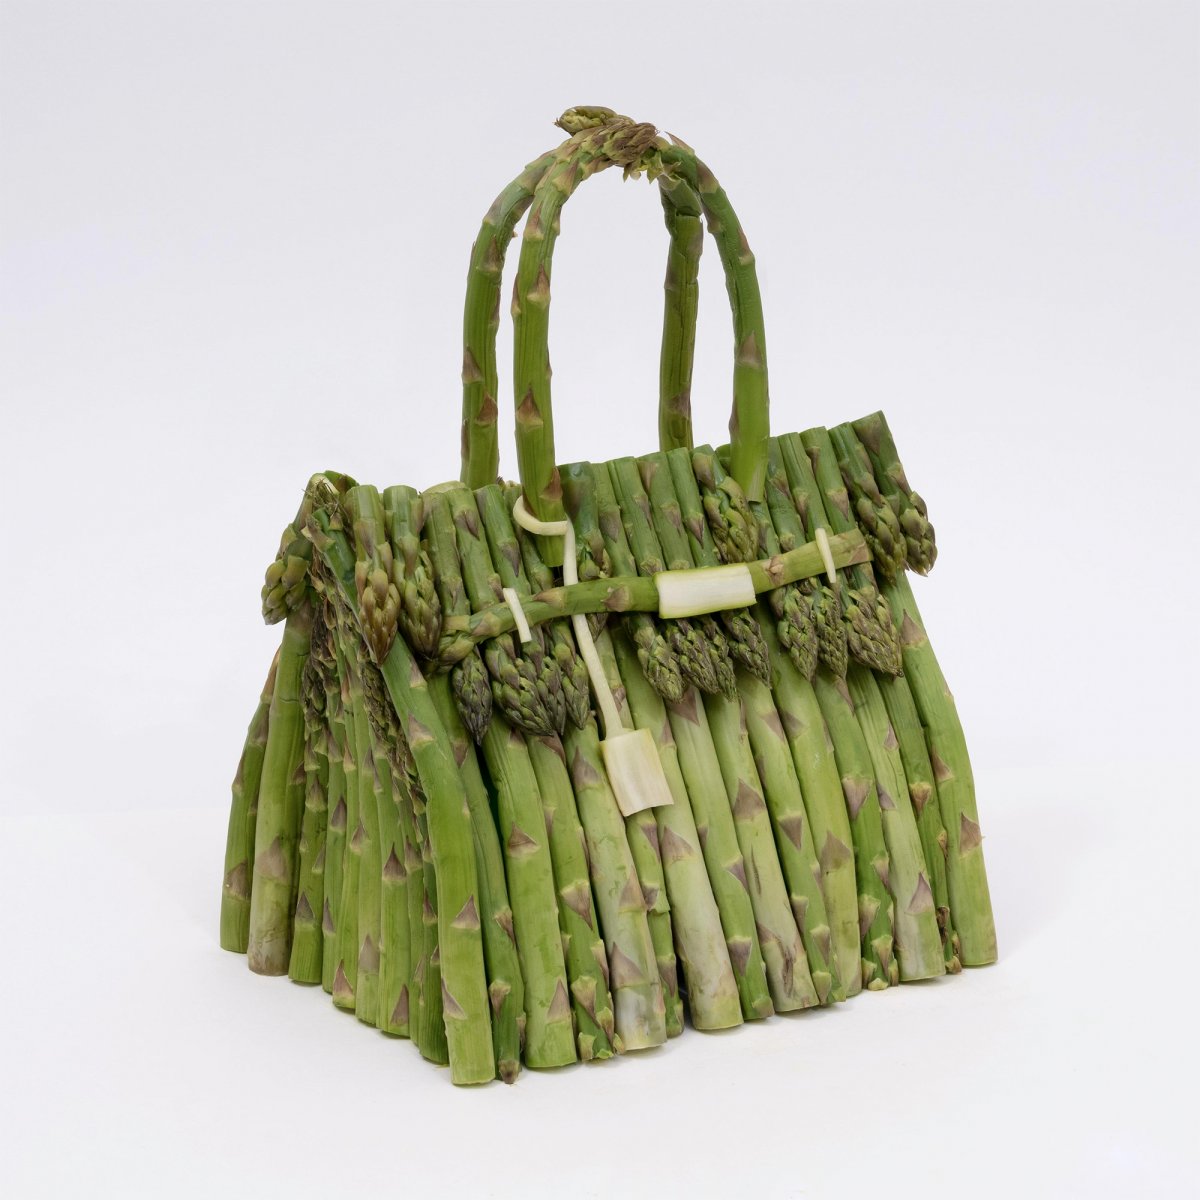 Birkin Bags In Vegetable Versions By Ben Denzer 2